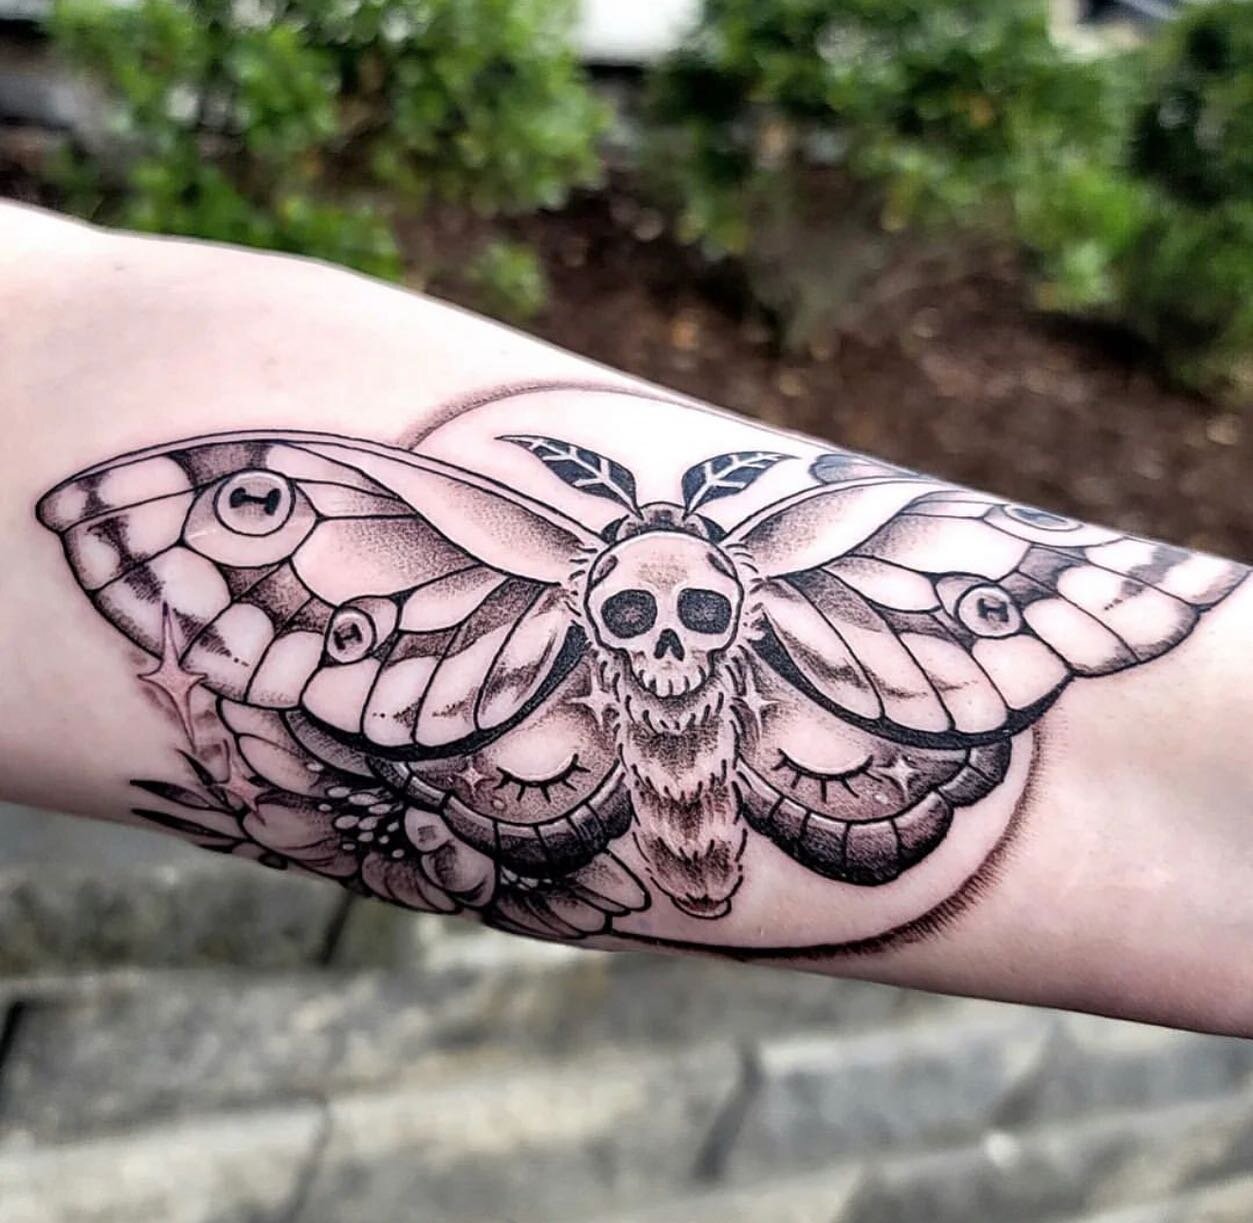 Rad death moth for @hollyrennaa by @inki.kat